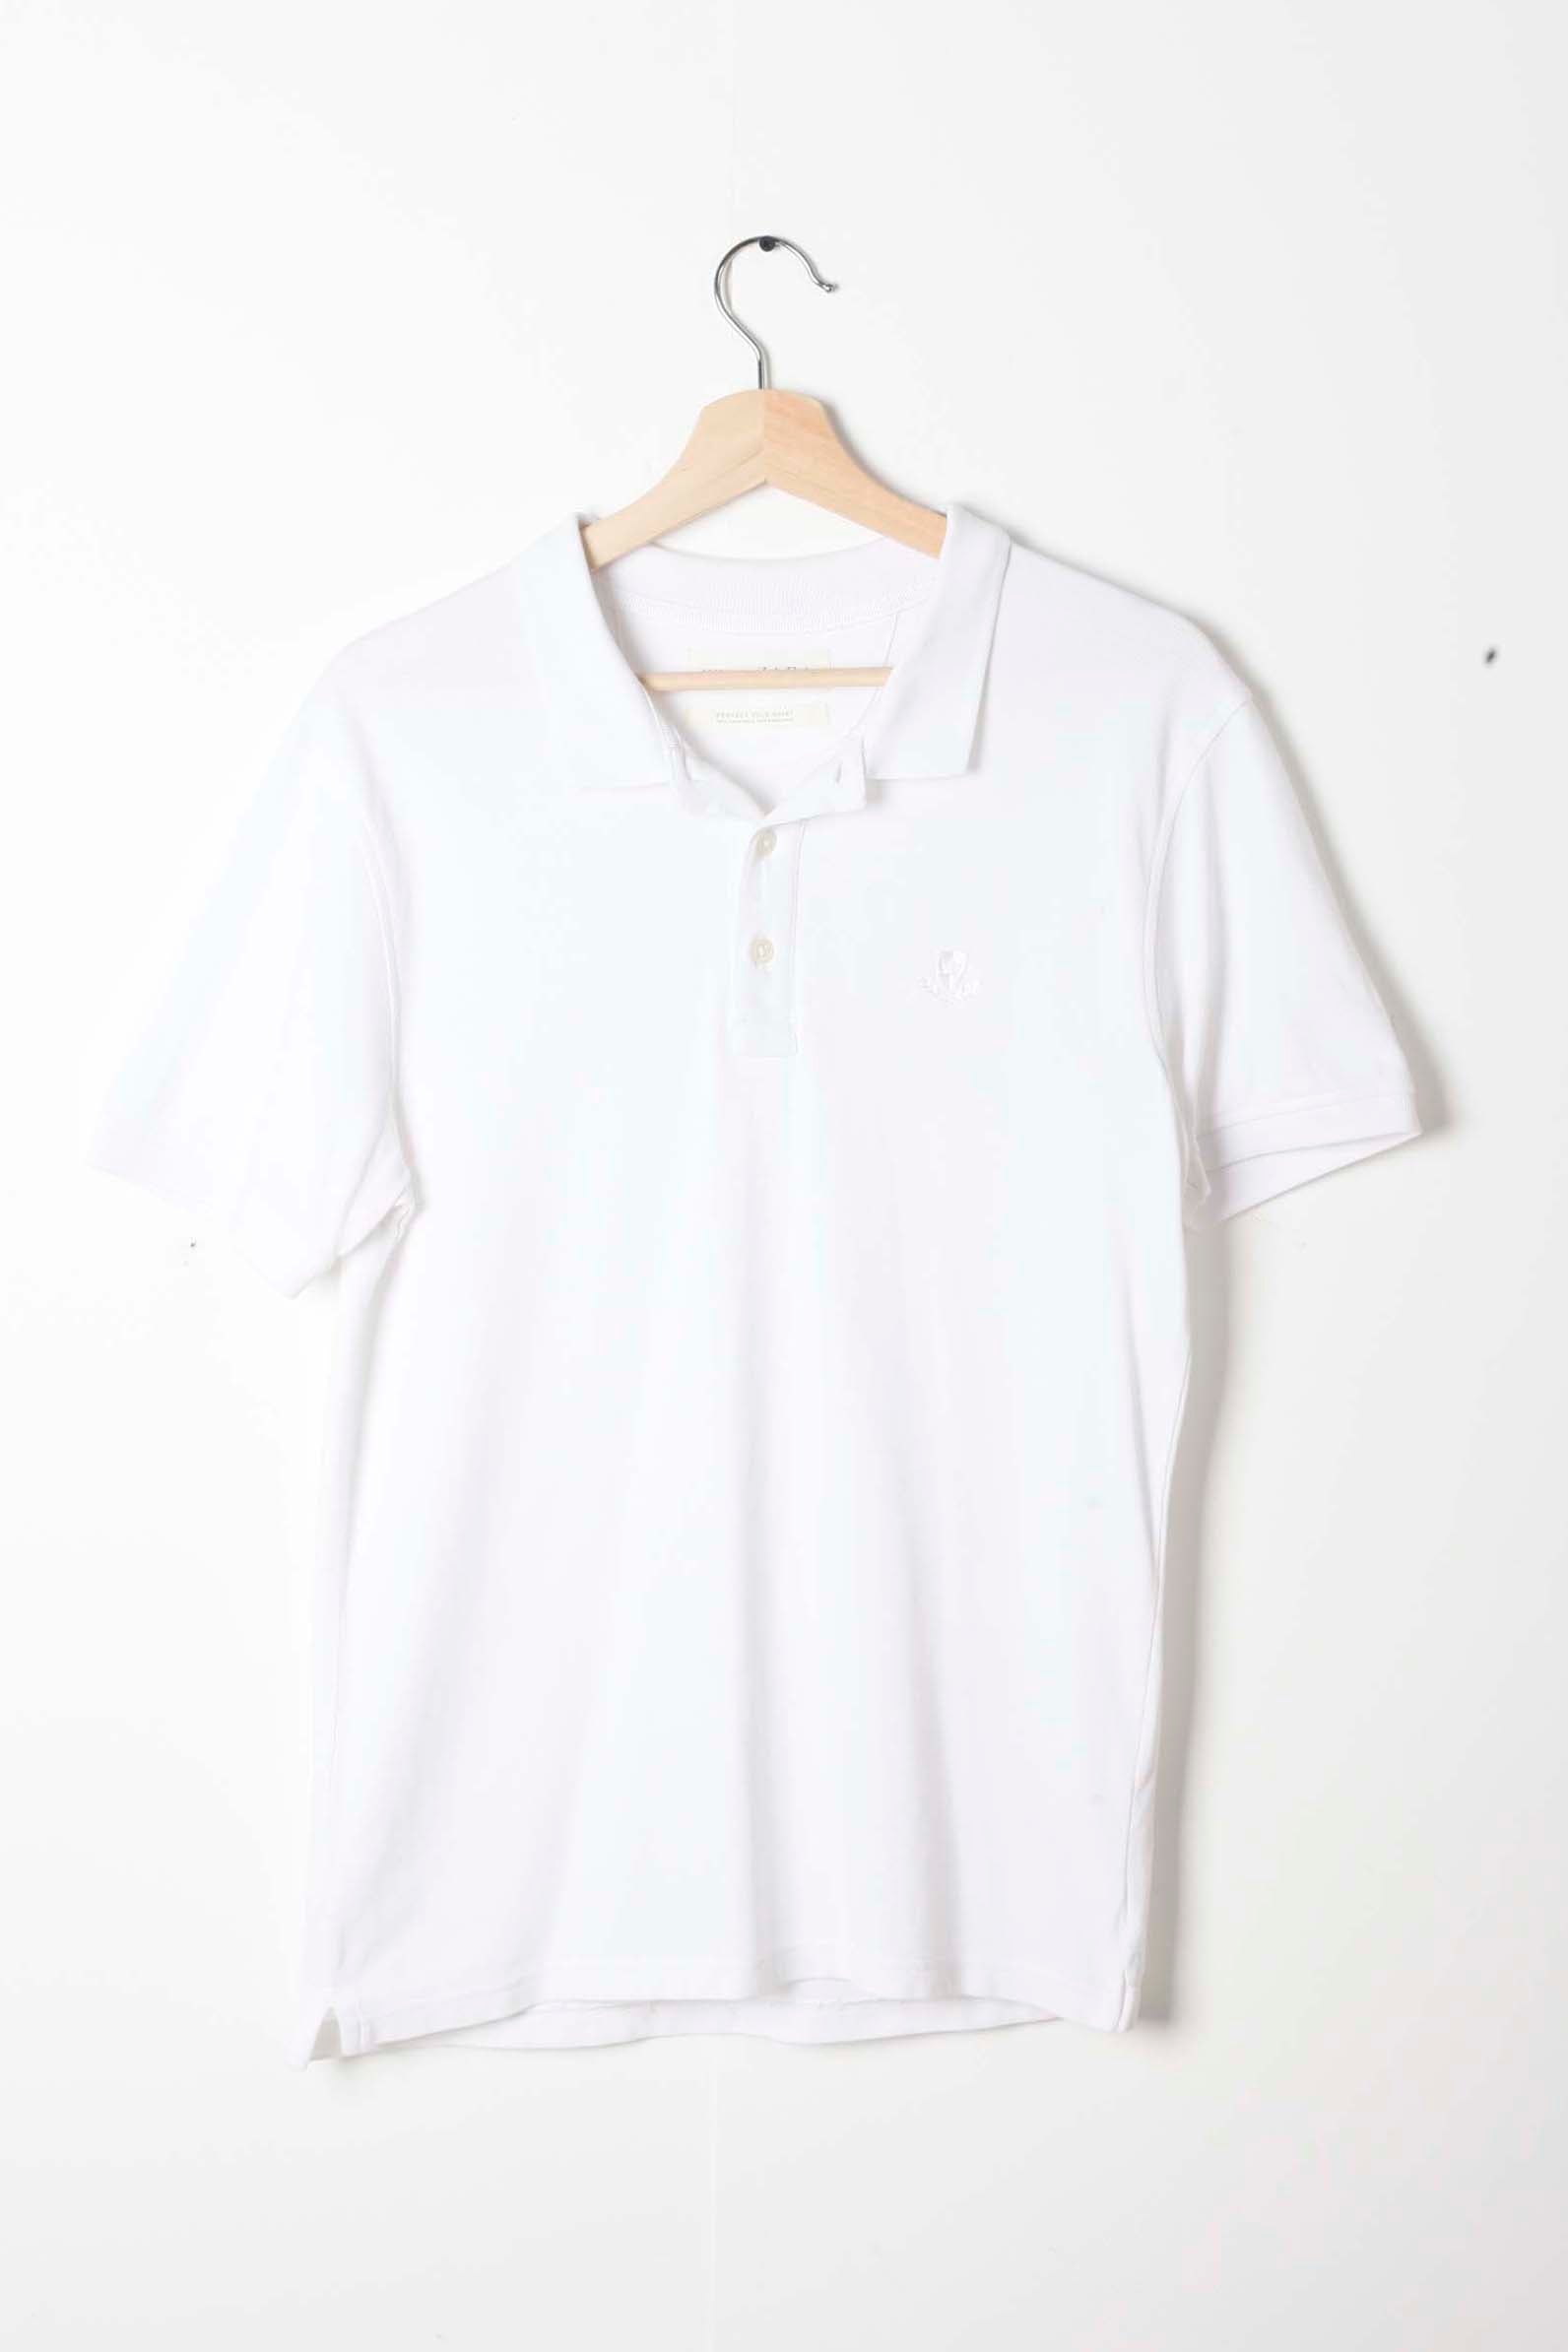 Mens White Polo Shirt (small)